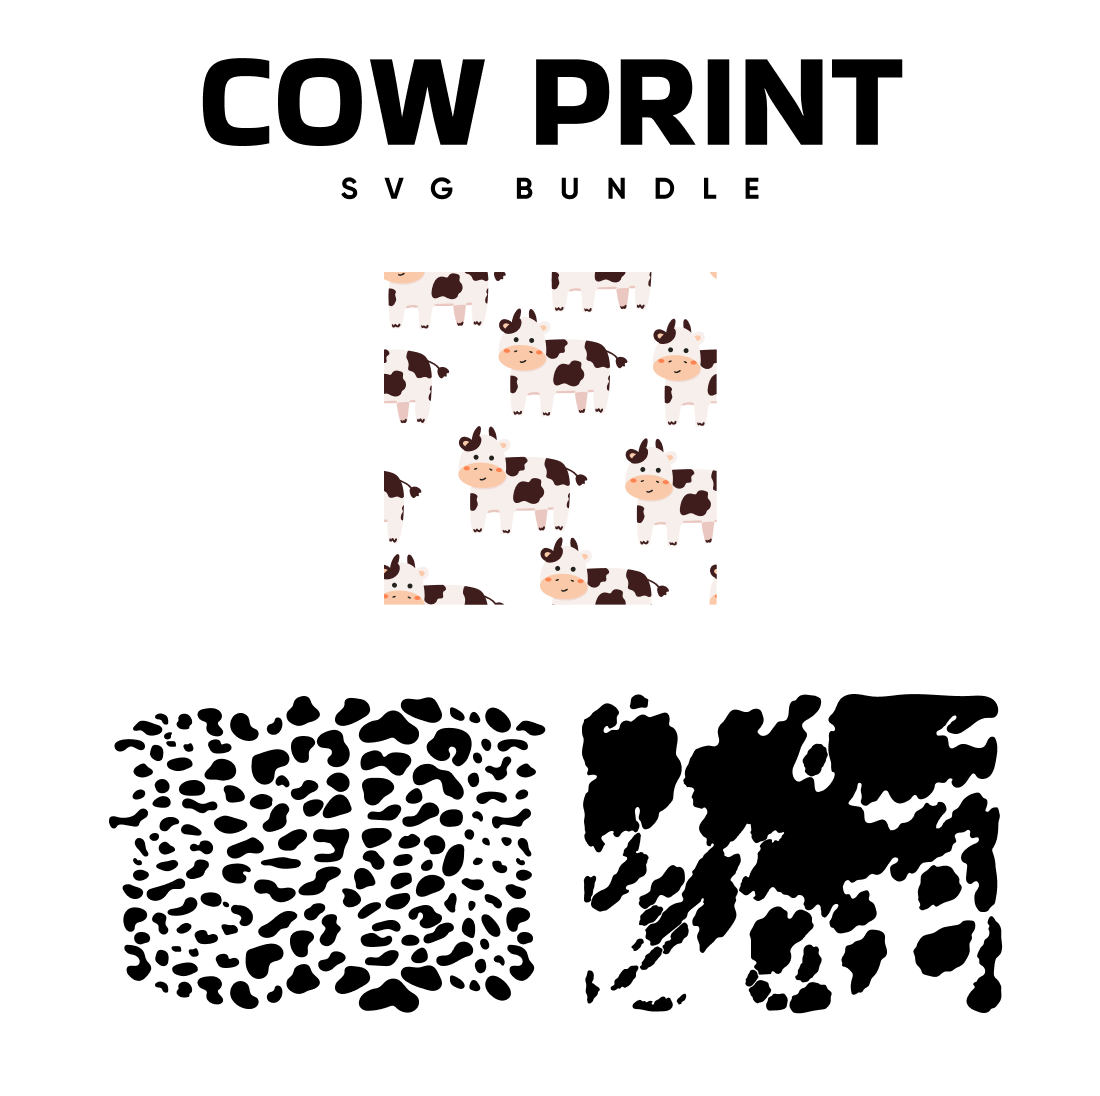 Cow Print SVG Free.